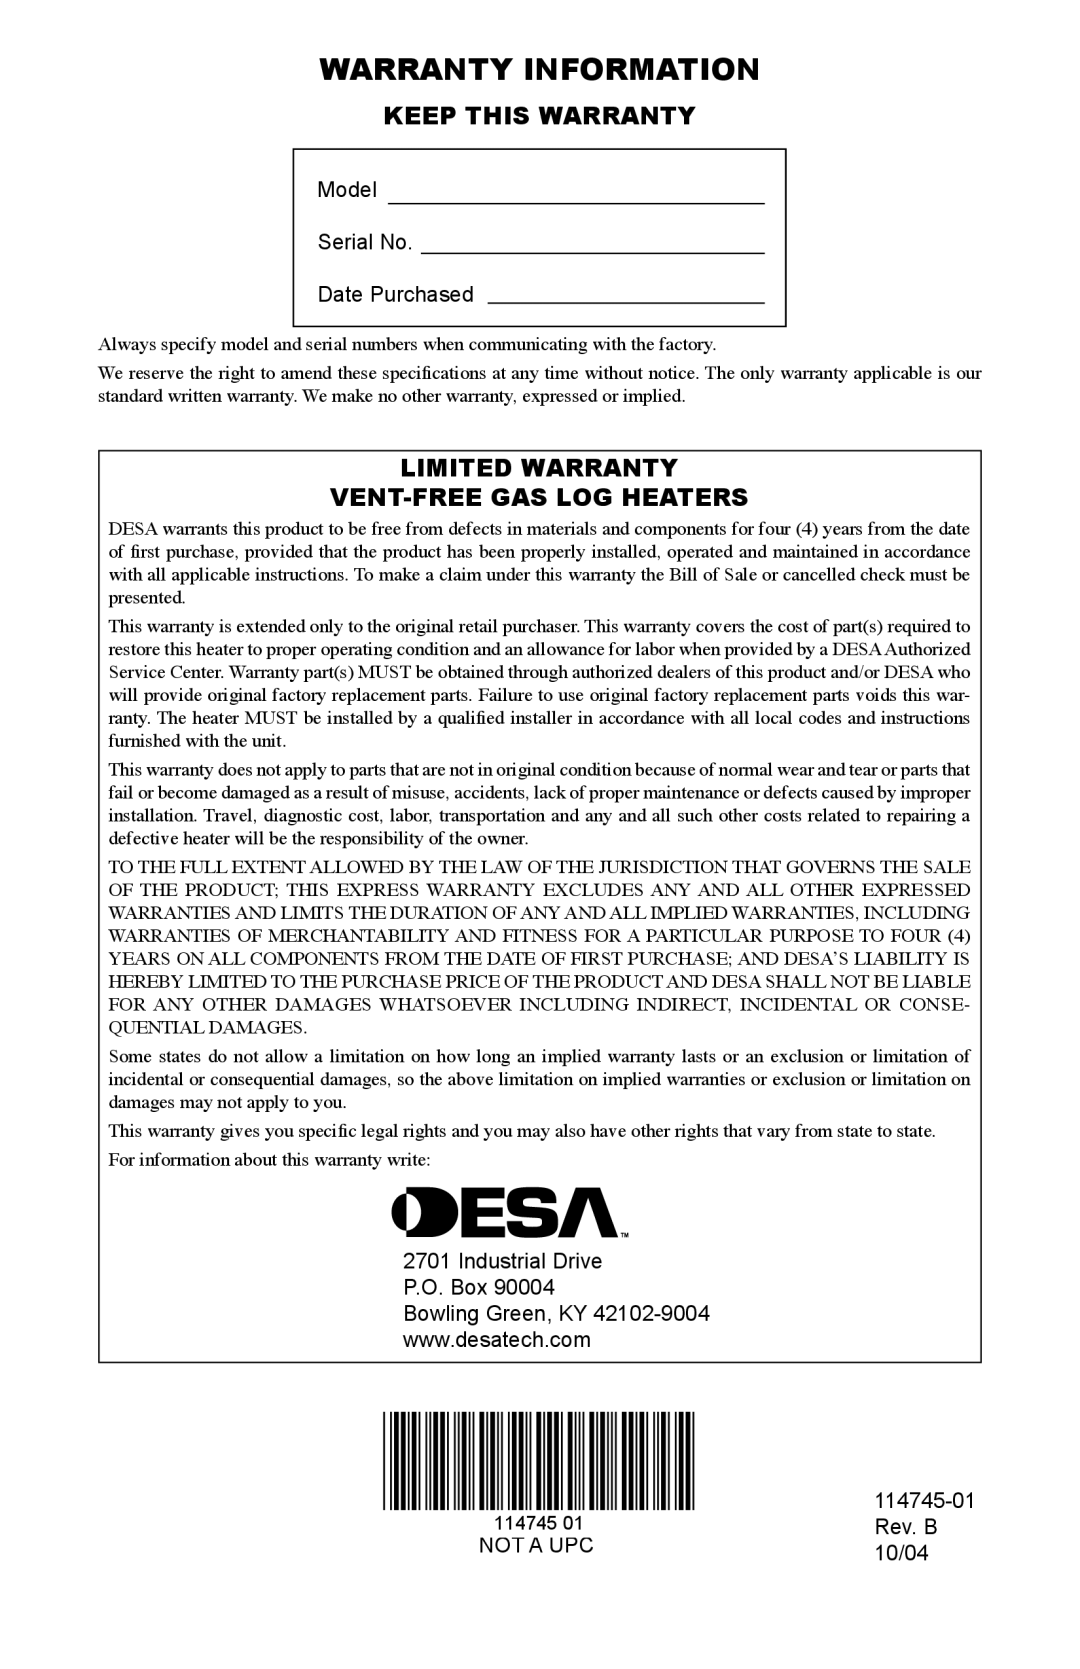 Desa VFRMV24PA installation manual Warranty Information, Keep This Warranty, Limited Warranty Vent-Freegas Log Heaters 